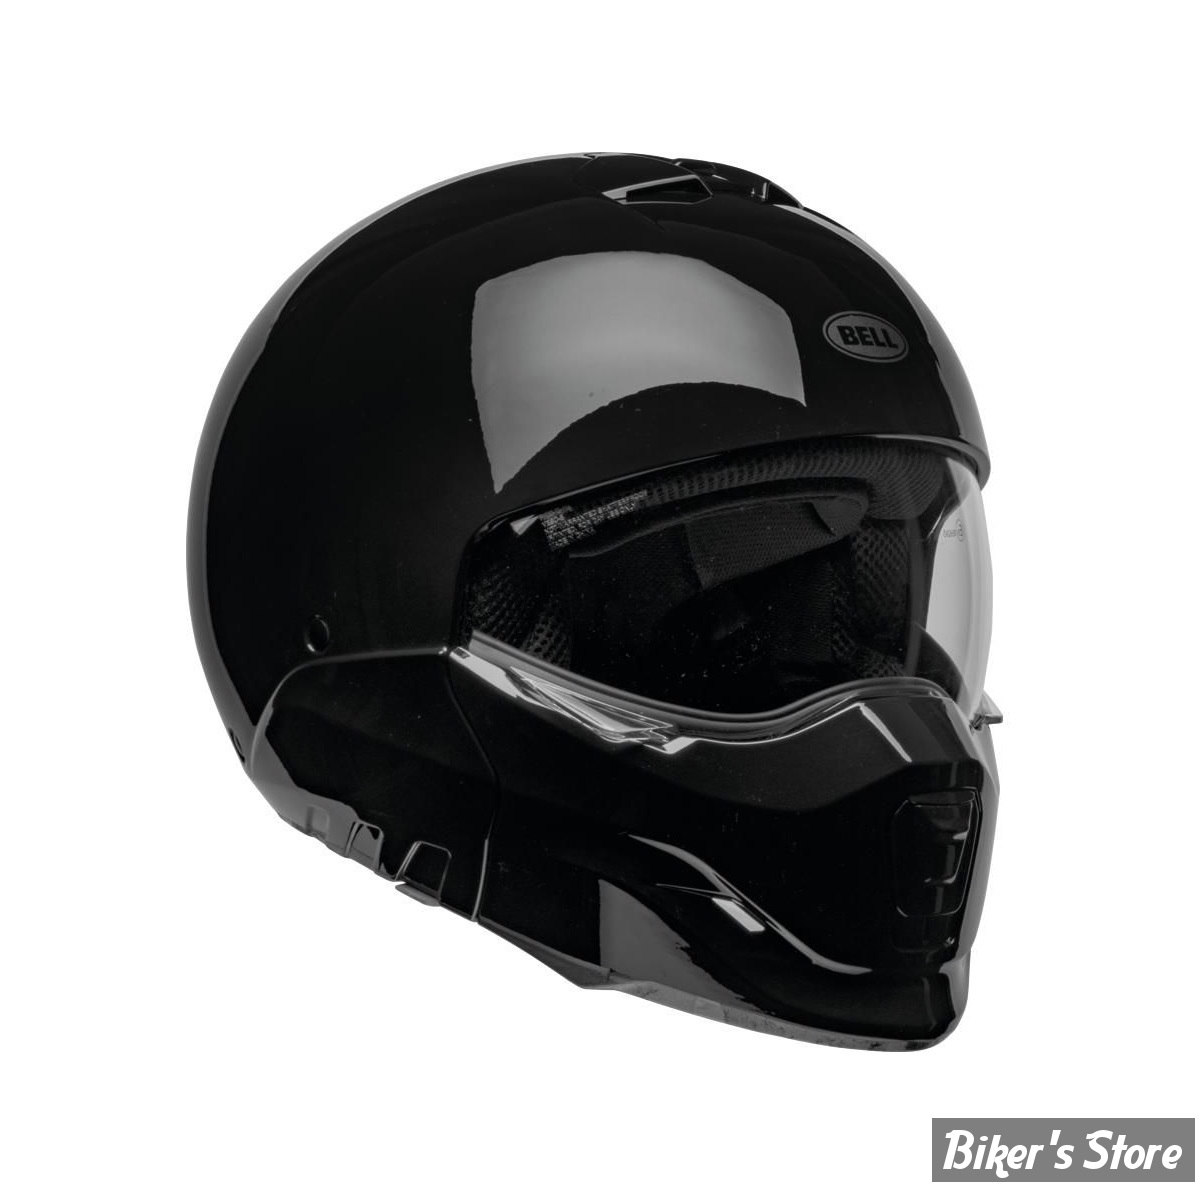 - CASQUE BELL - Broozer Modular Helmet - CONVERTIBLE - COULEUR : NOIR BRILLANT - TAILLE : S